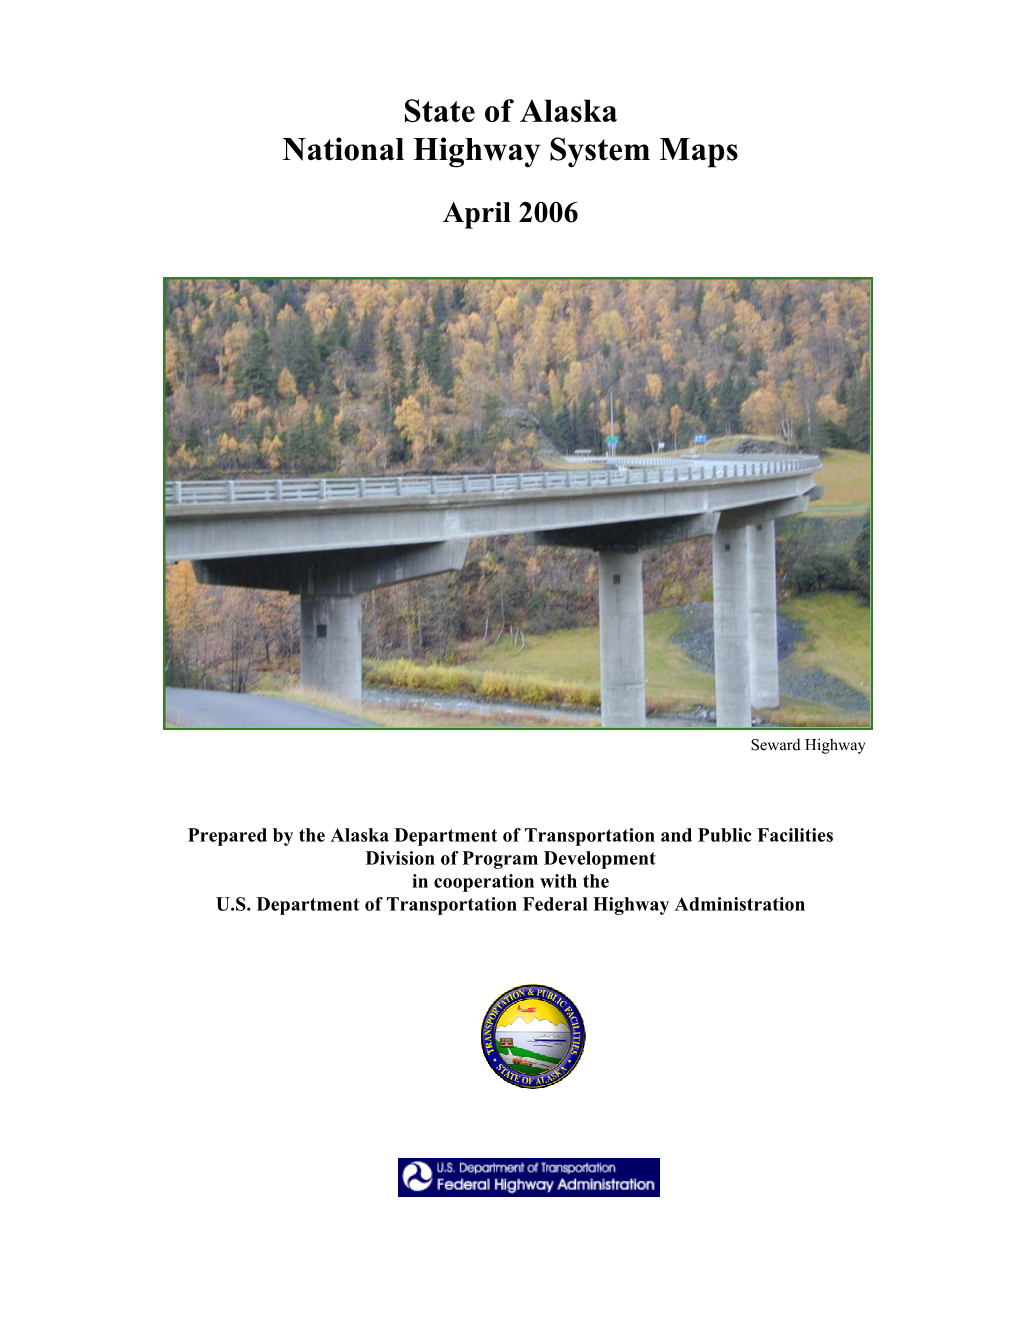 State of Alaska National Highway System Maps